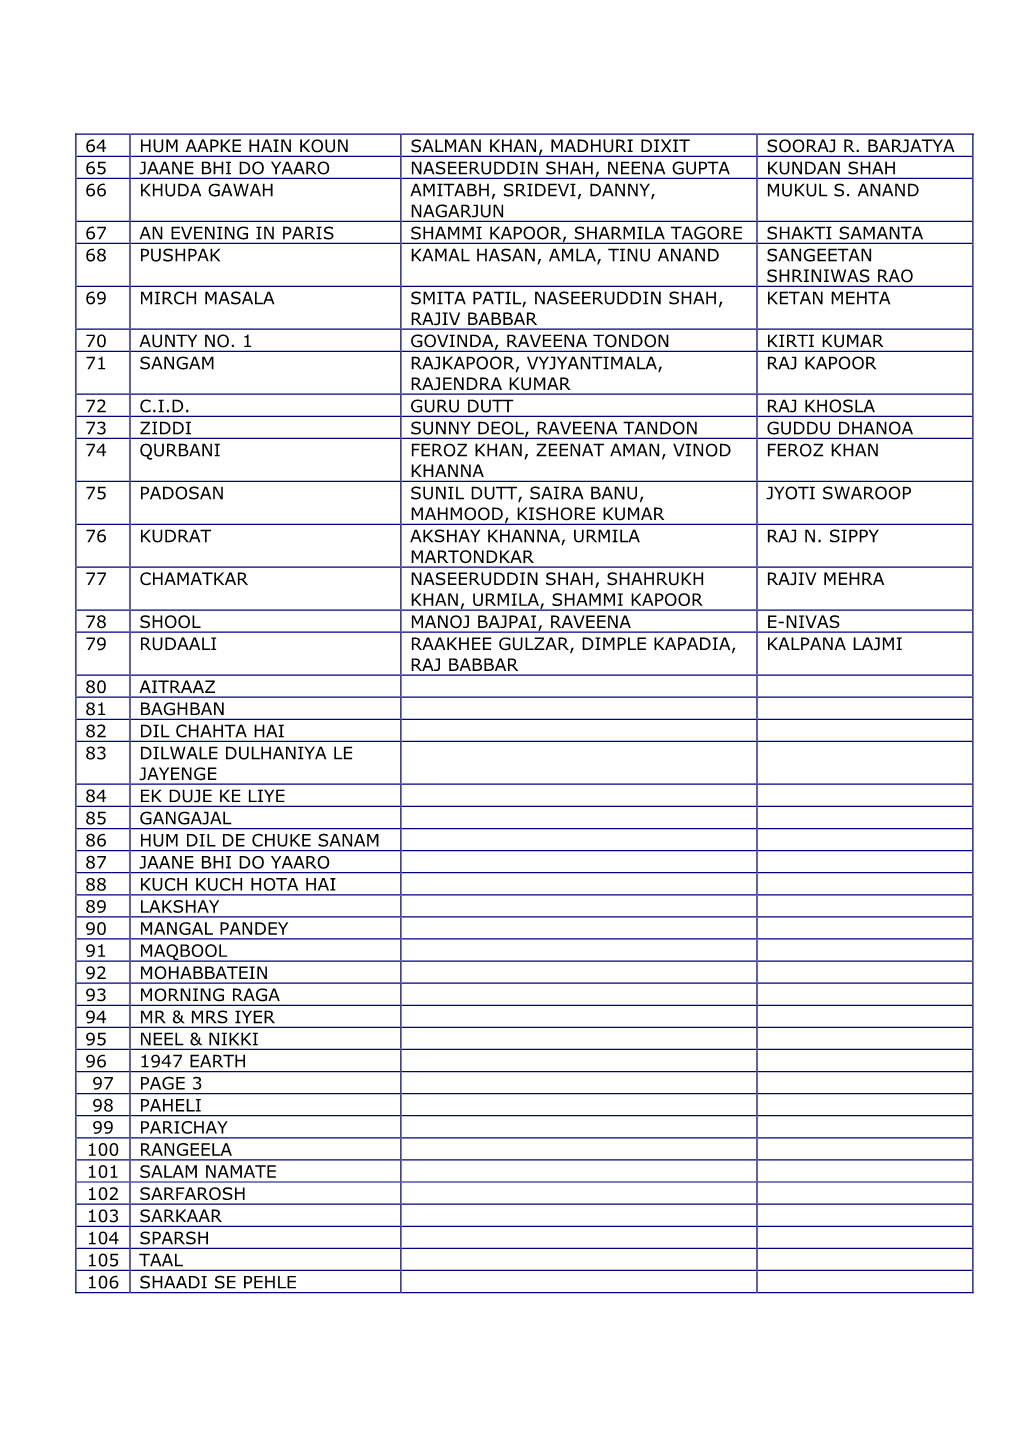 List of Vido CDS of Hindi Films